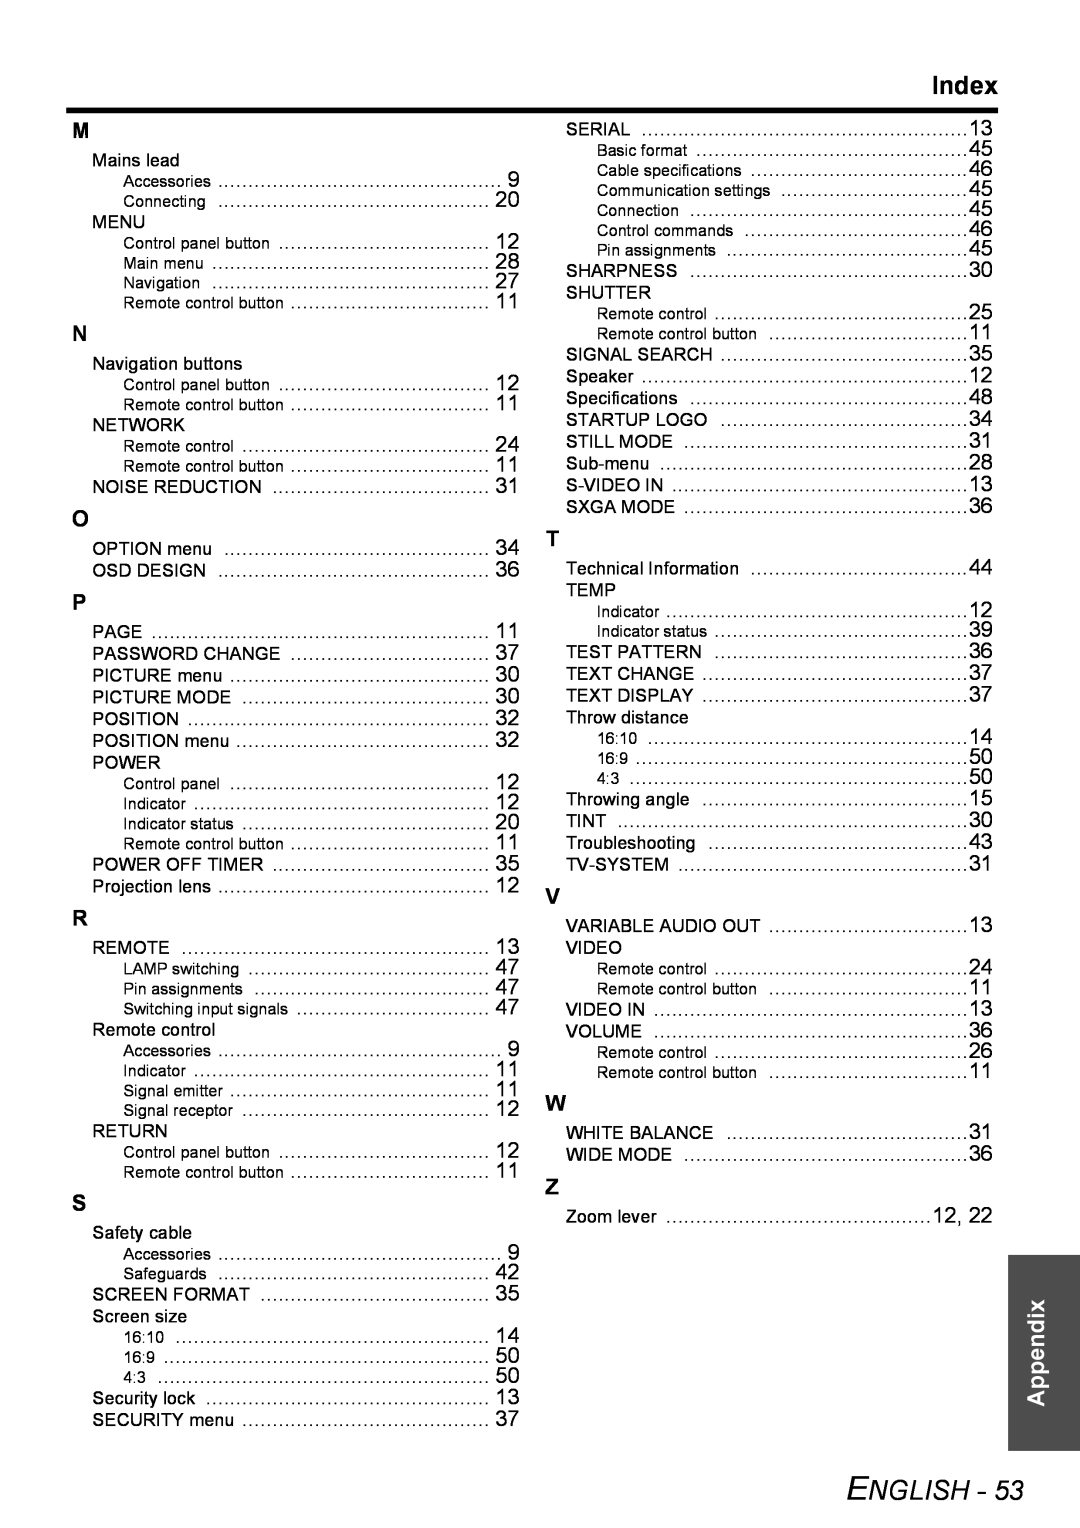 Panasonic PT-FW100NTU manual Index, English, Appendix 